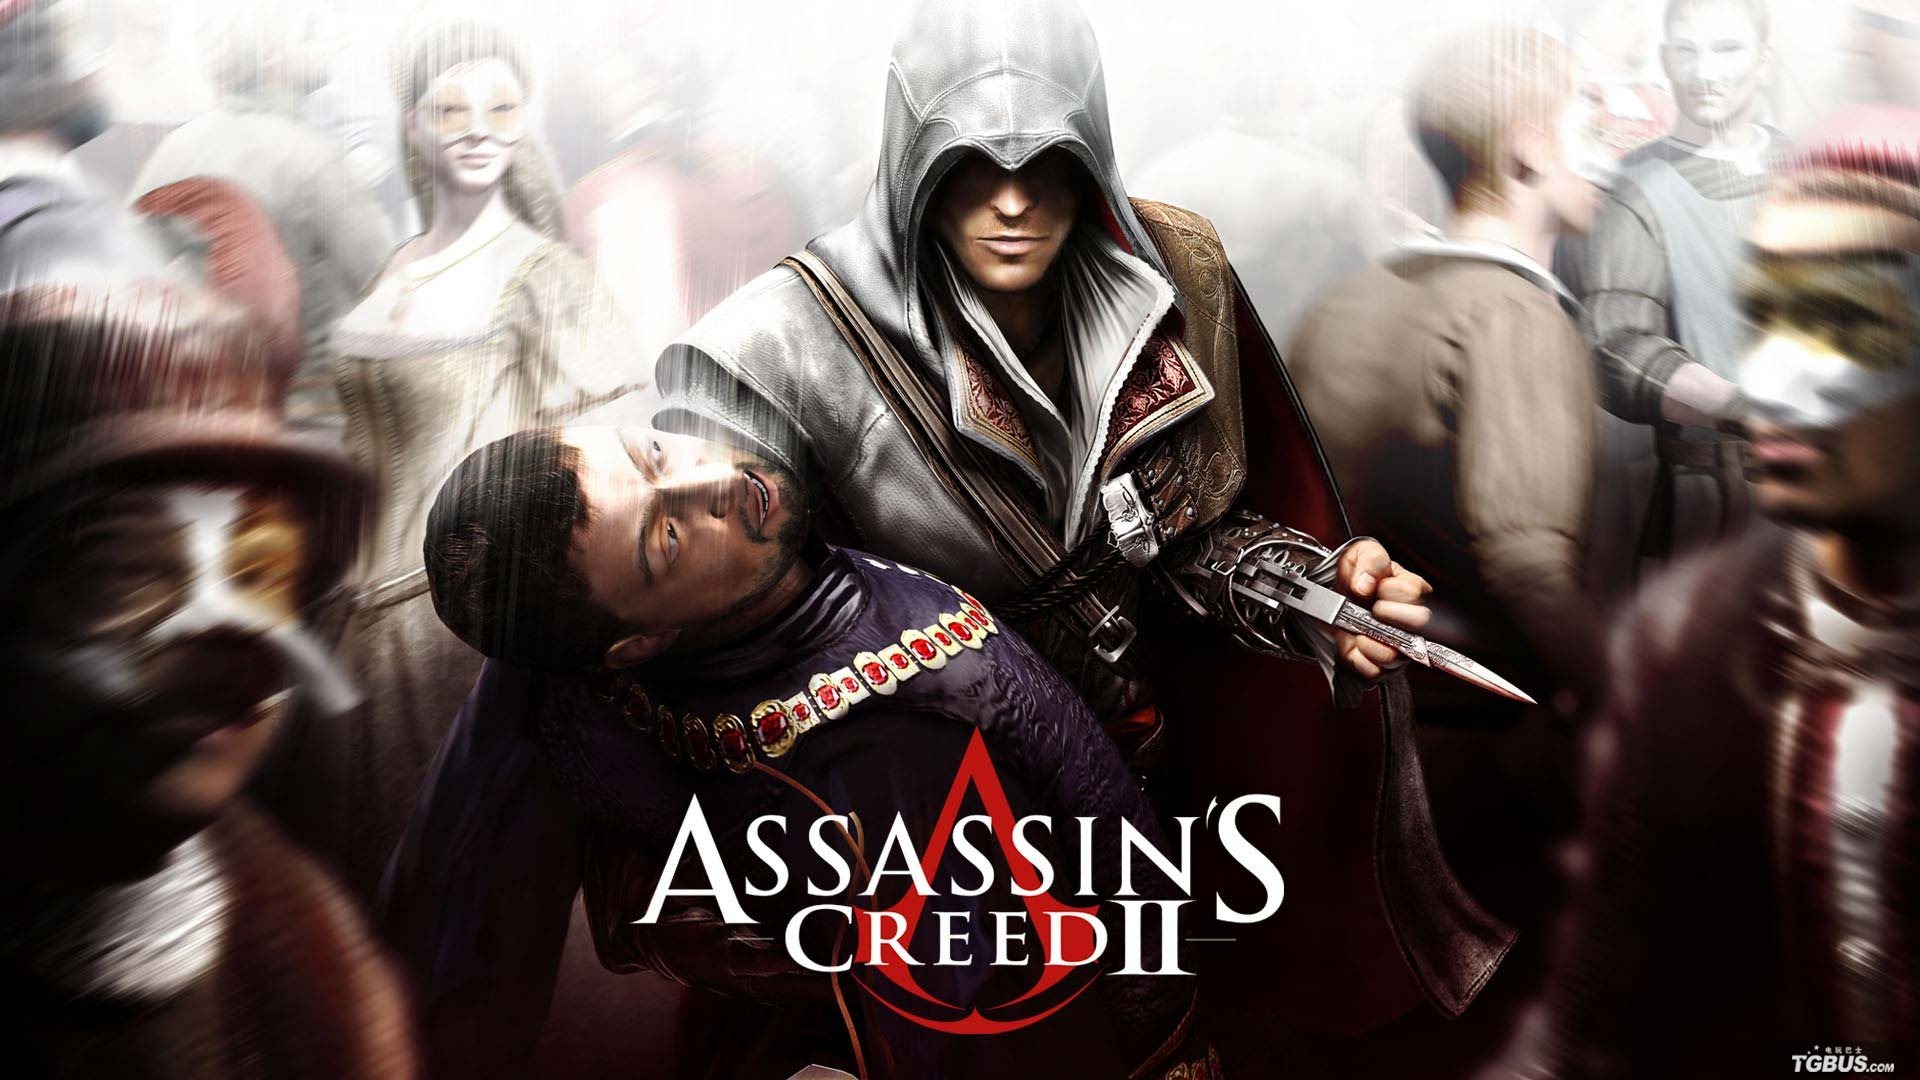 Assassins Creed: Brotherhood HD Wallpaper #12 - 1920x1080